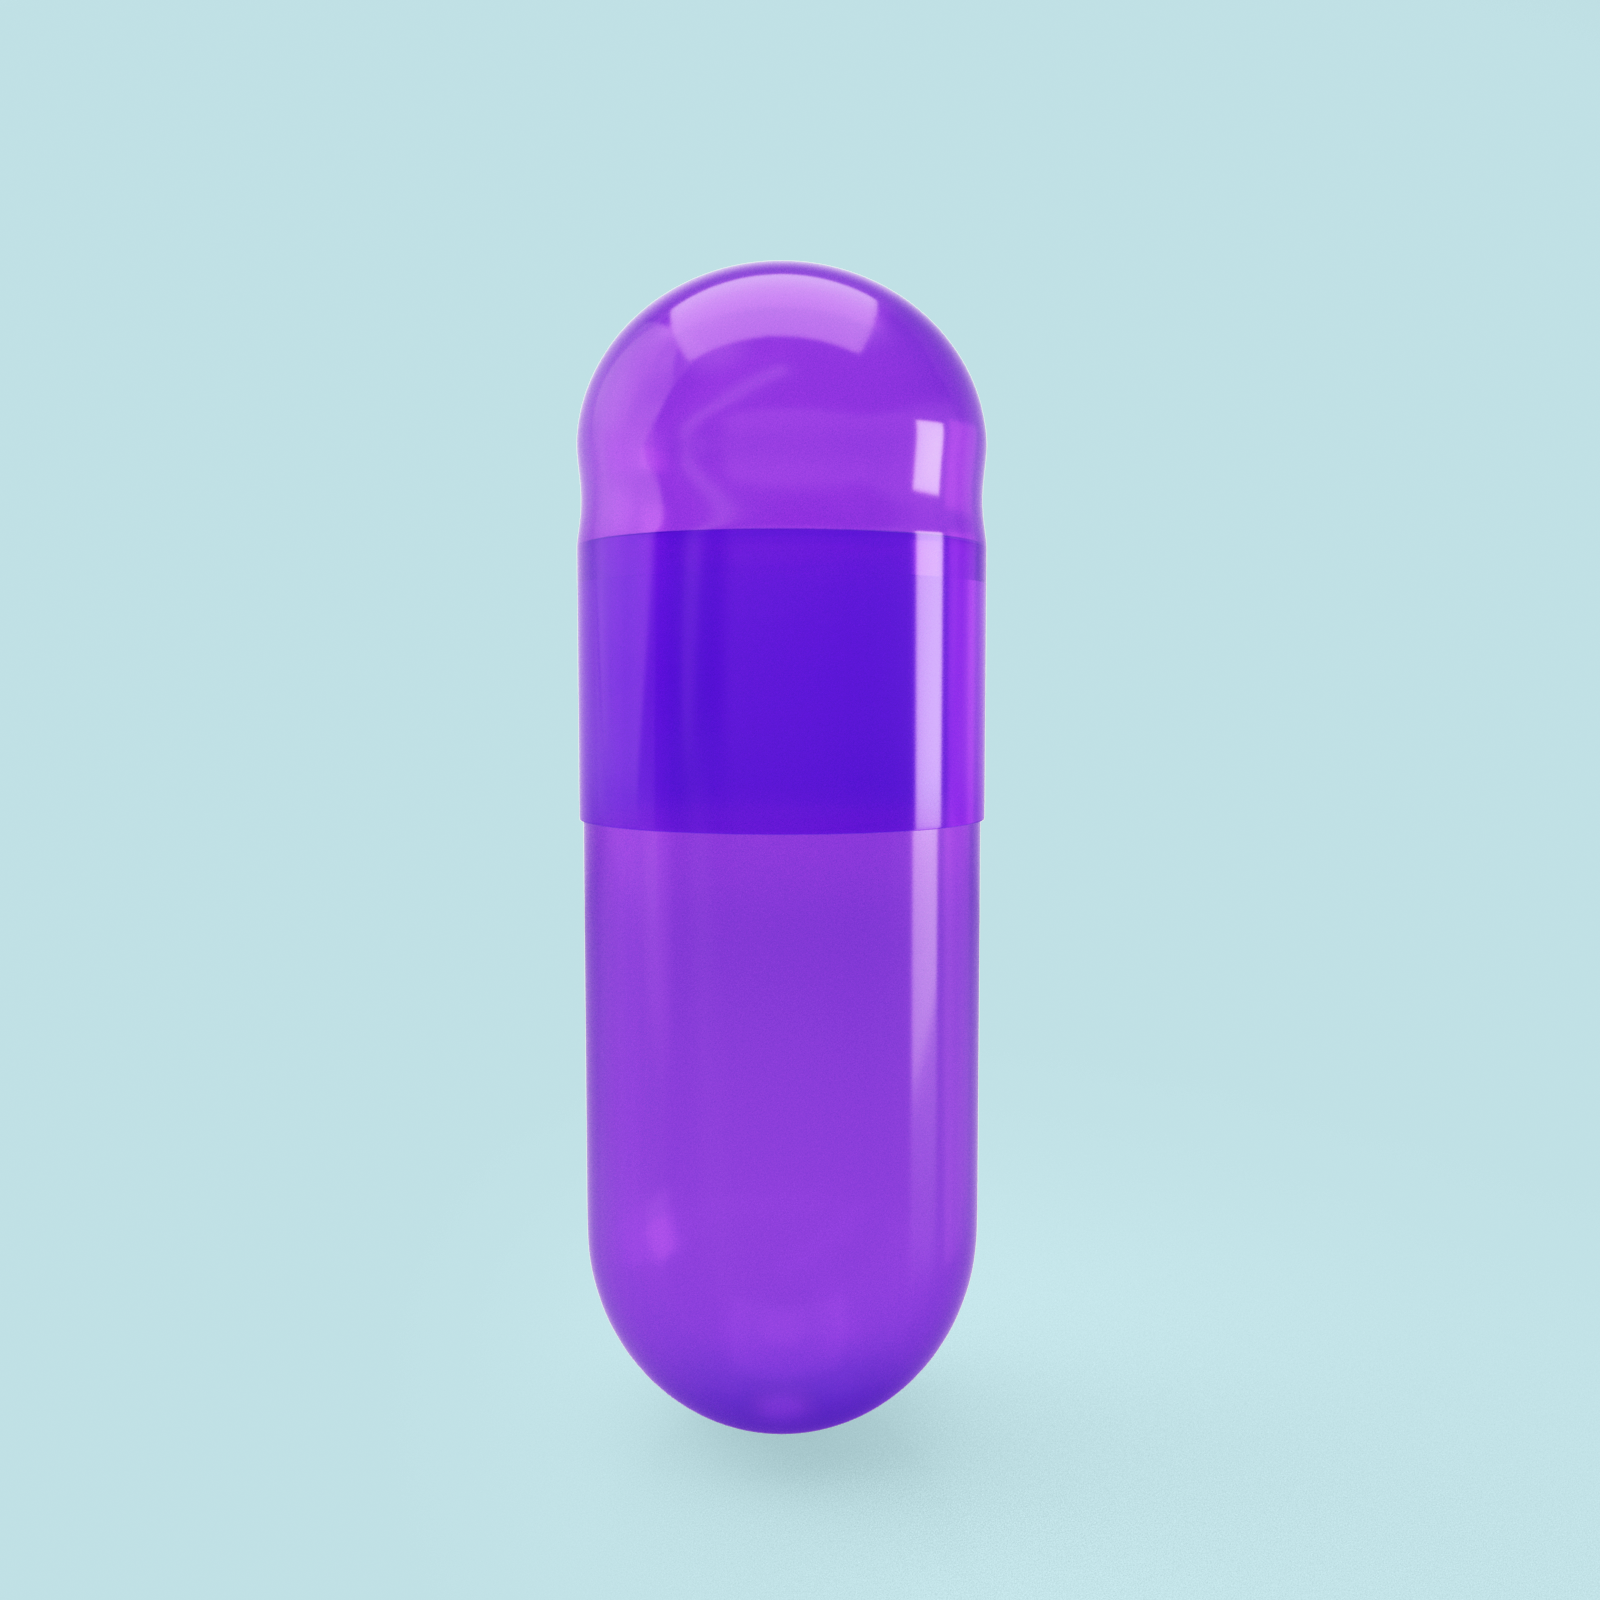 Titanium Dioxide (TiO2) Free - Colored Empty Gelatin Capsules Size 0 (Box of 100,000) - Purple